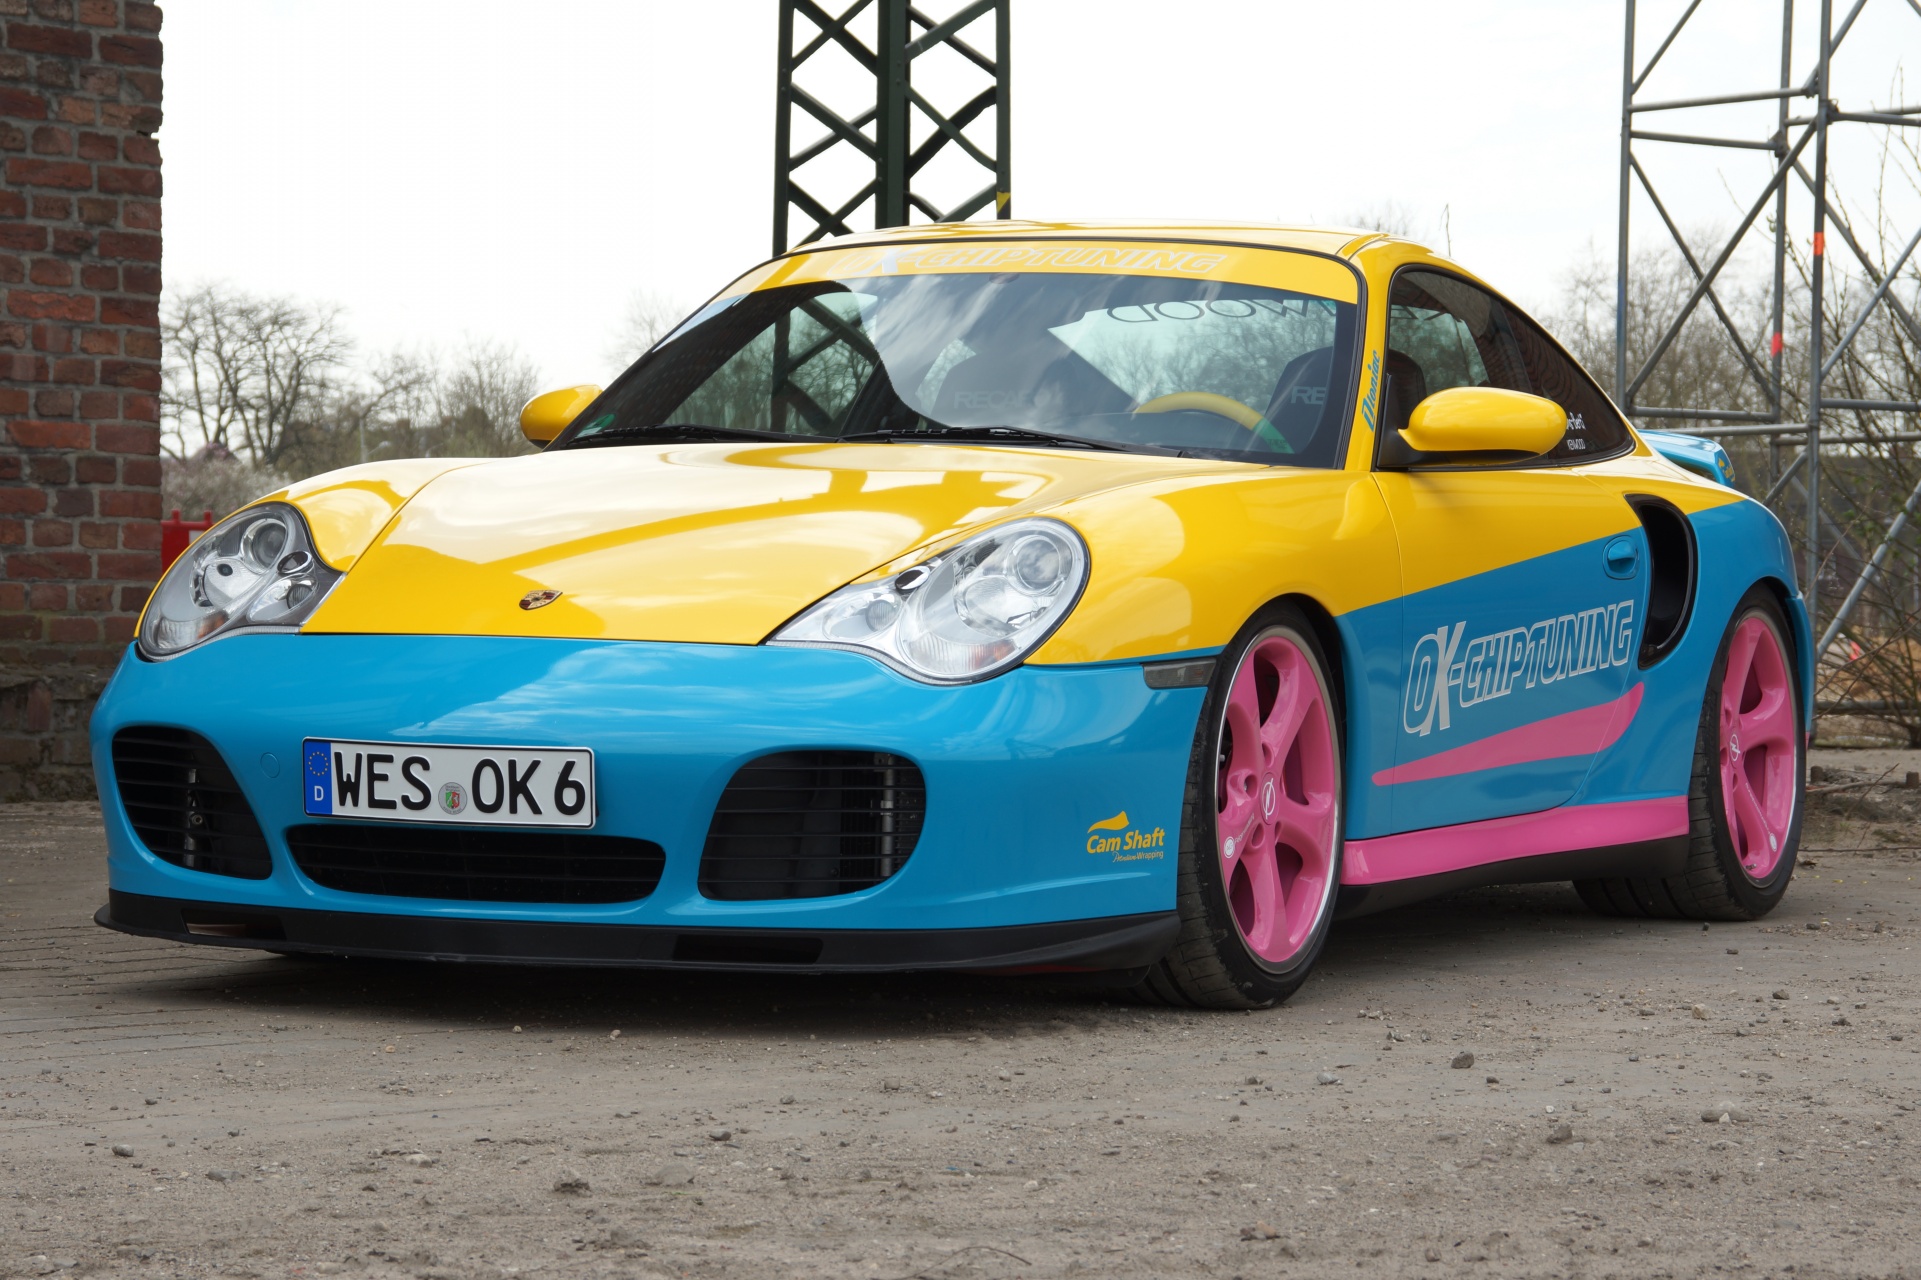 2005, Okchiptuning, Porsche, 911, Manta, Tuning Wallpaper